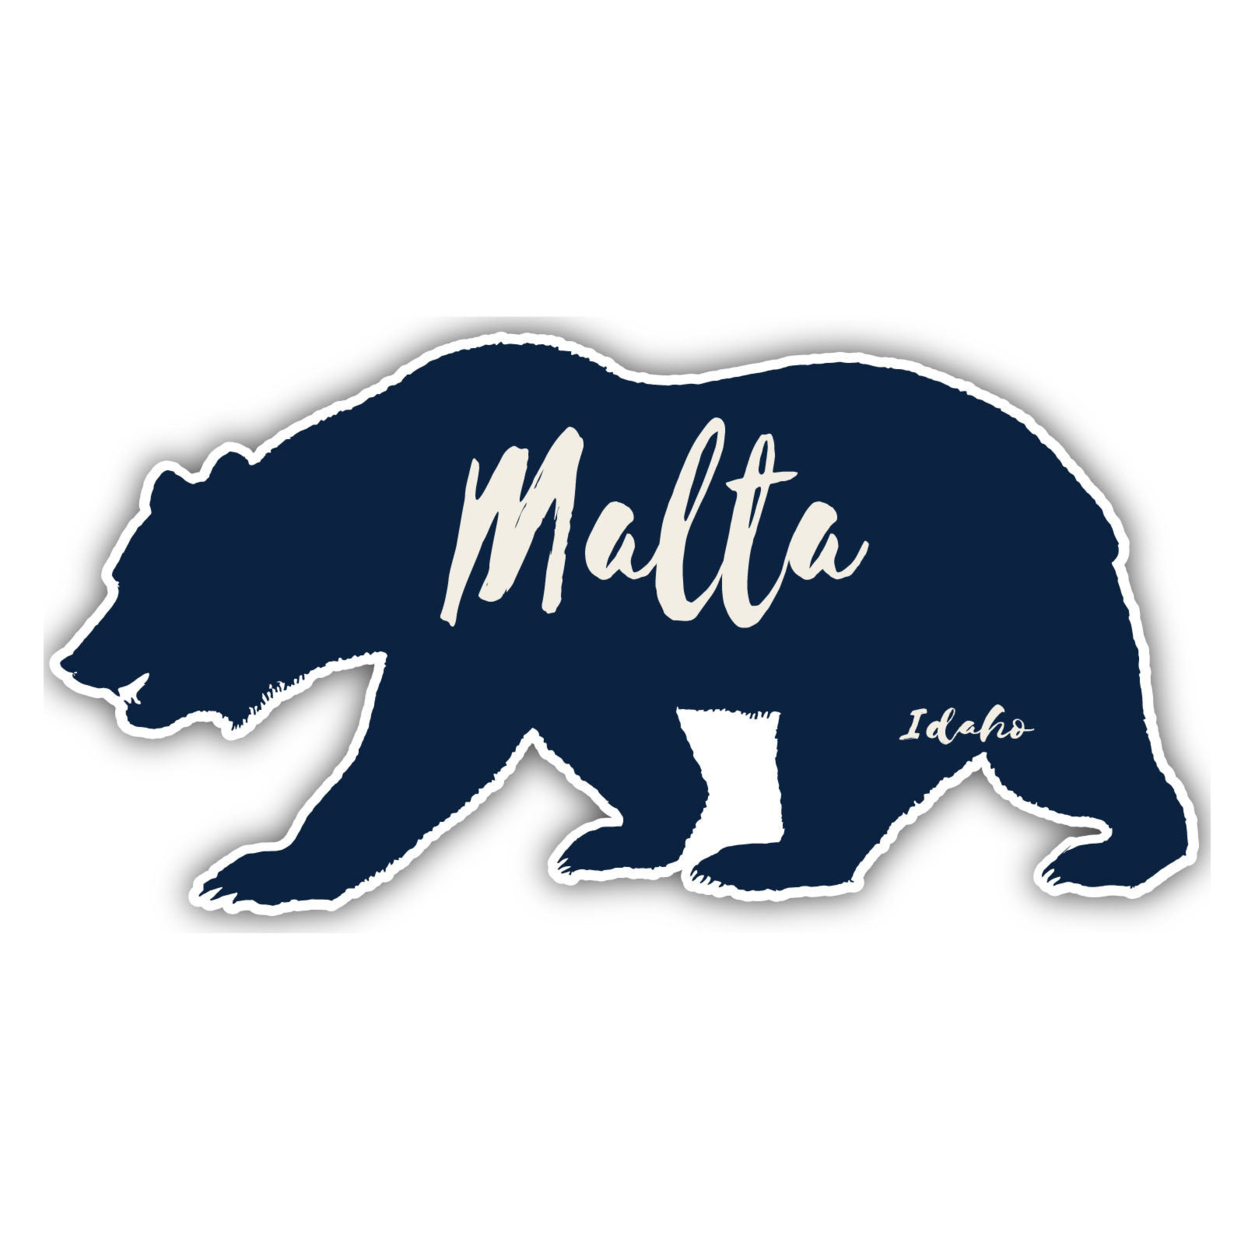 Malta Idaho Souvenir Decorative Stickers (Choose Theme And Size) - 4-Inch, Bear